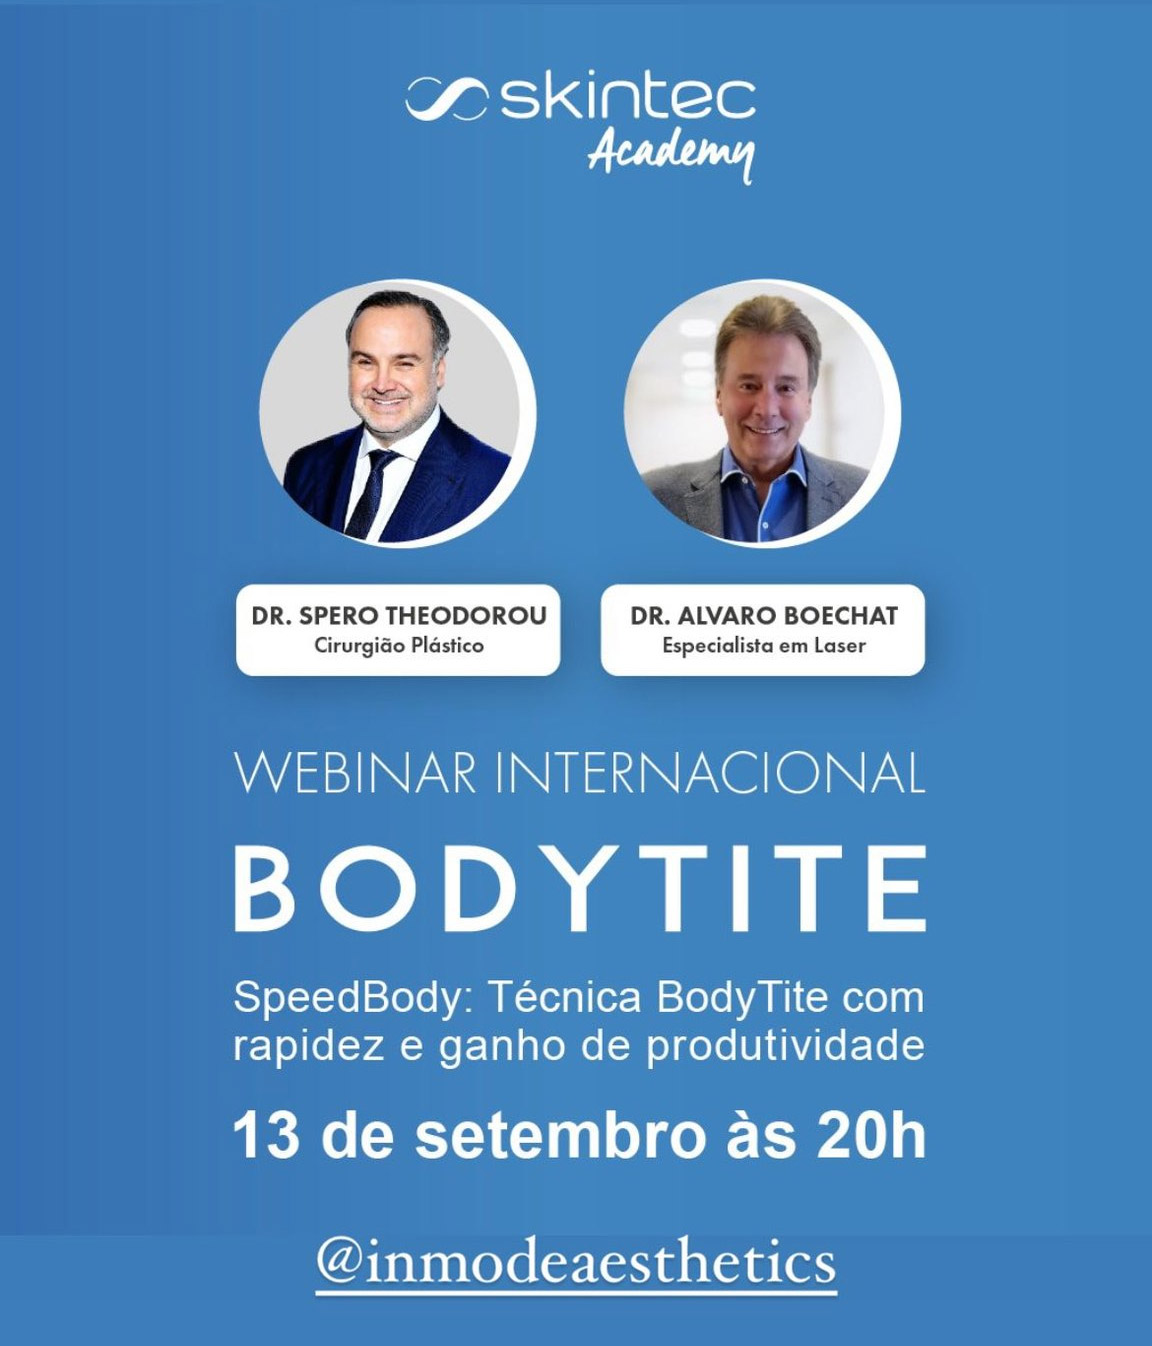 Dr. Spero Theodorou to Speak at Skintec Academy’s International BodyTite Webinar